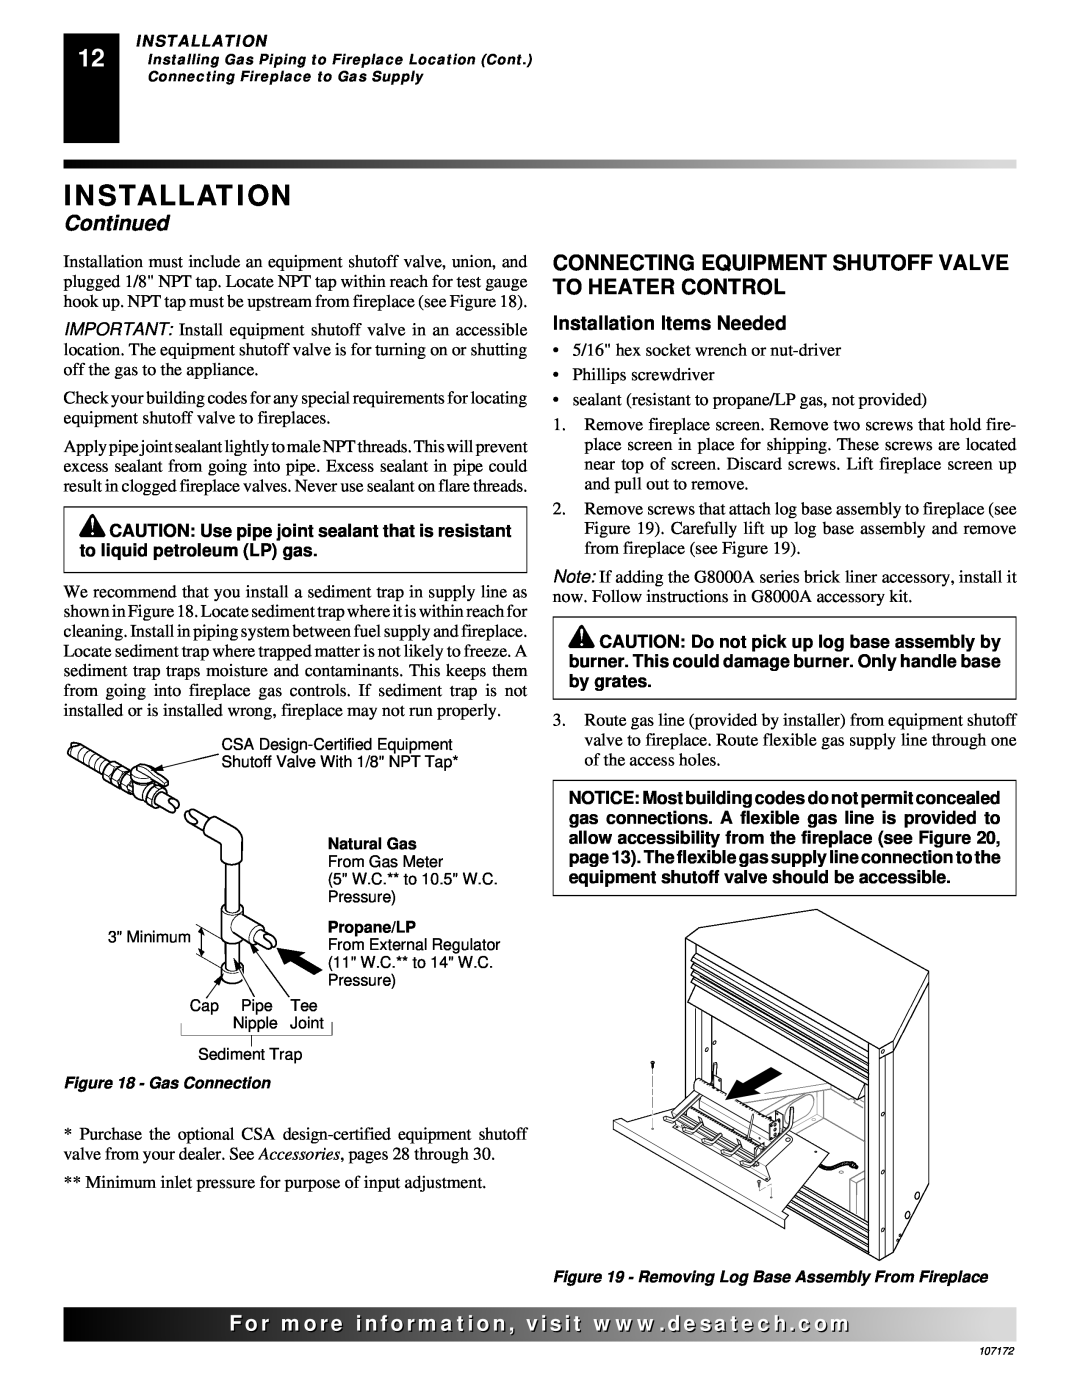 Desa EFS33NR, VSGF33PR installation manual Continued, Installation Items Needed, 5/16 hex socket wrench or nut-driver 